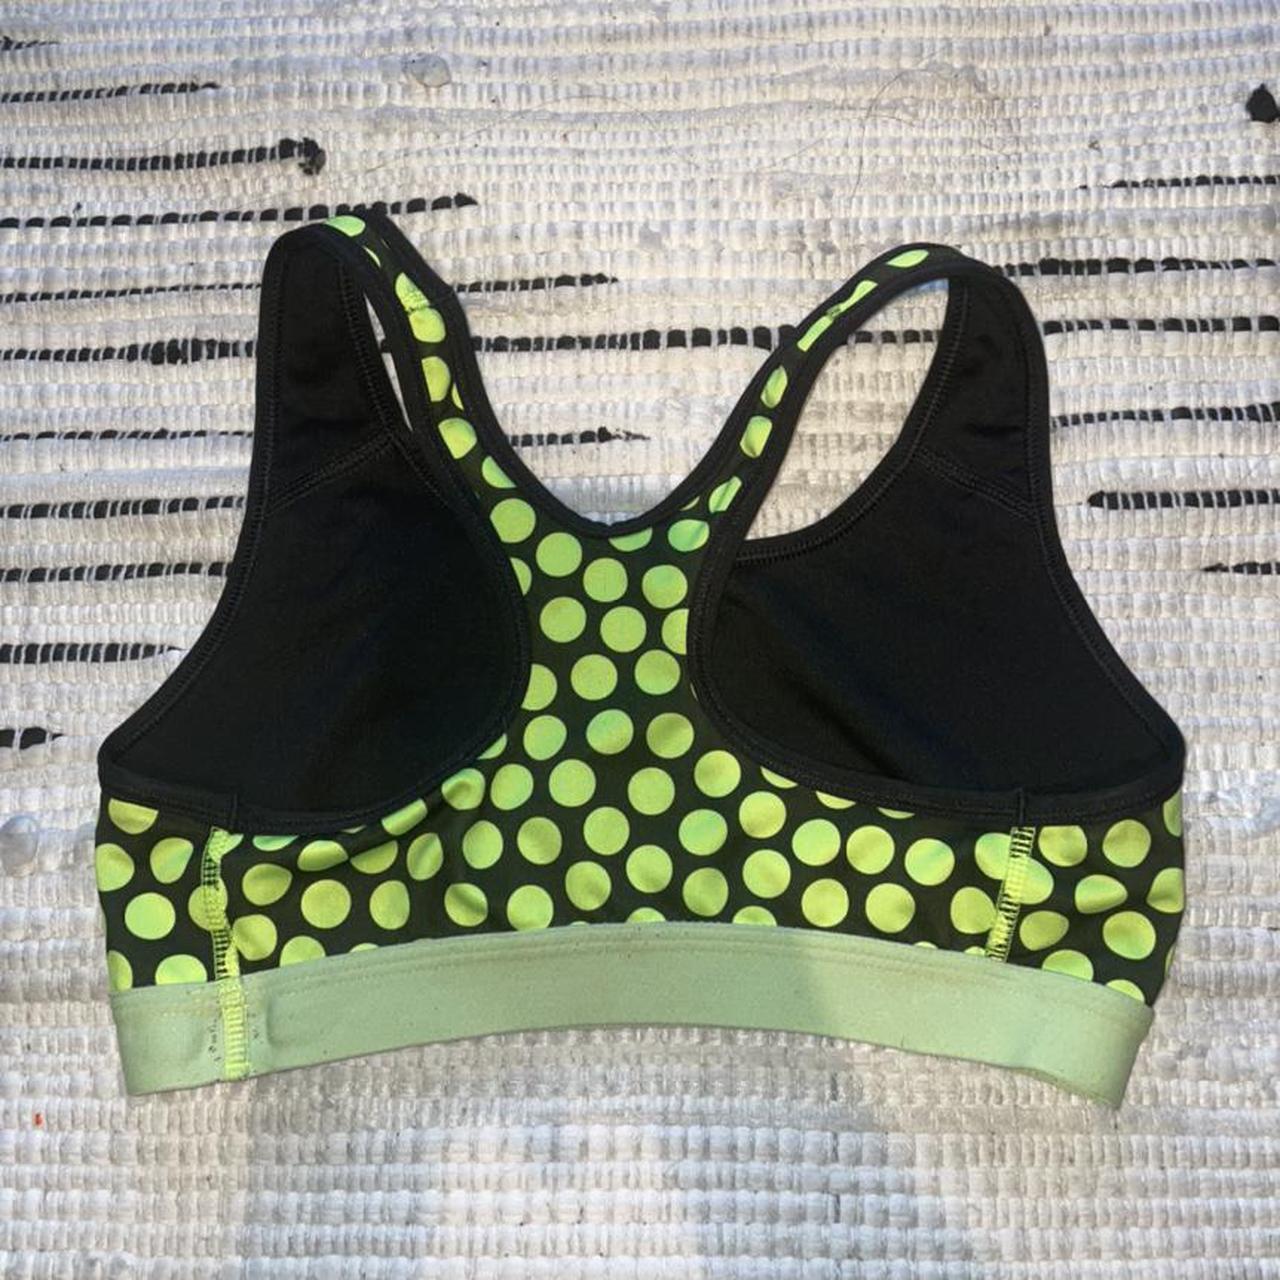 Nike sports bra Neon yellow and black 9/10 - Depop